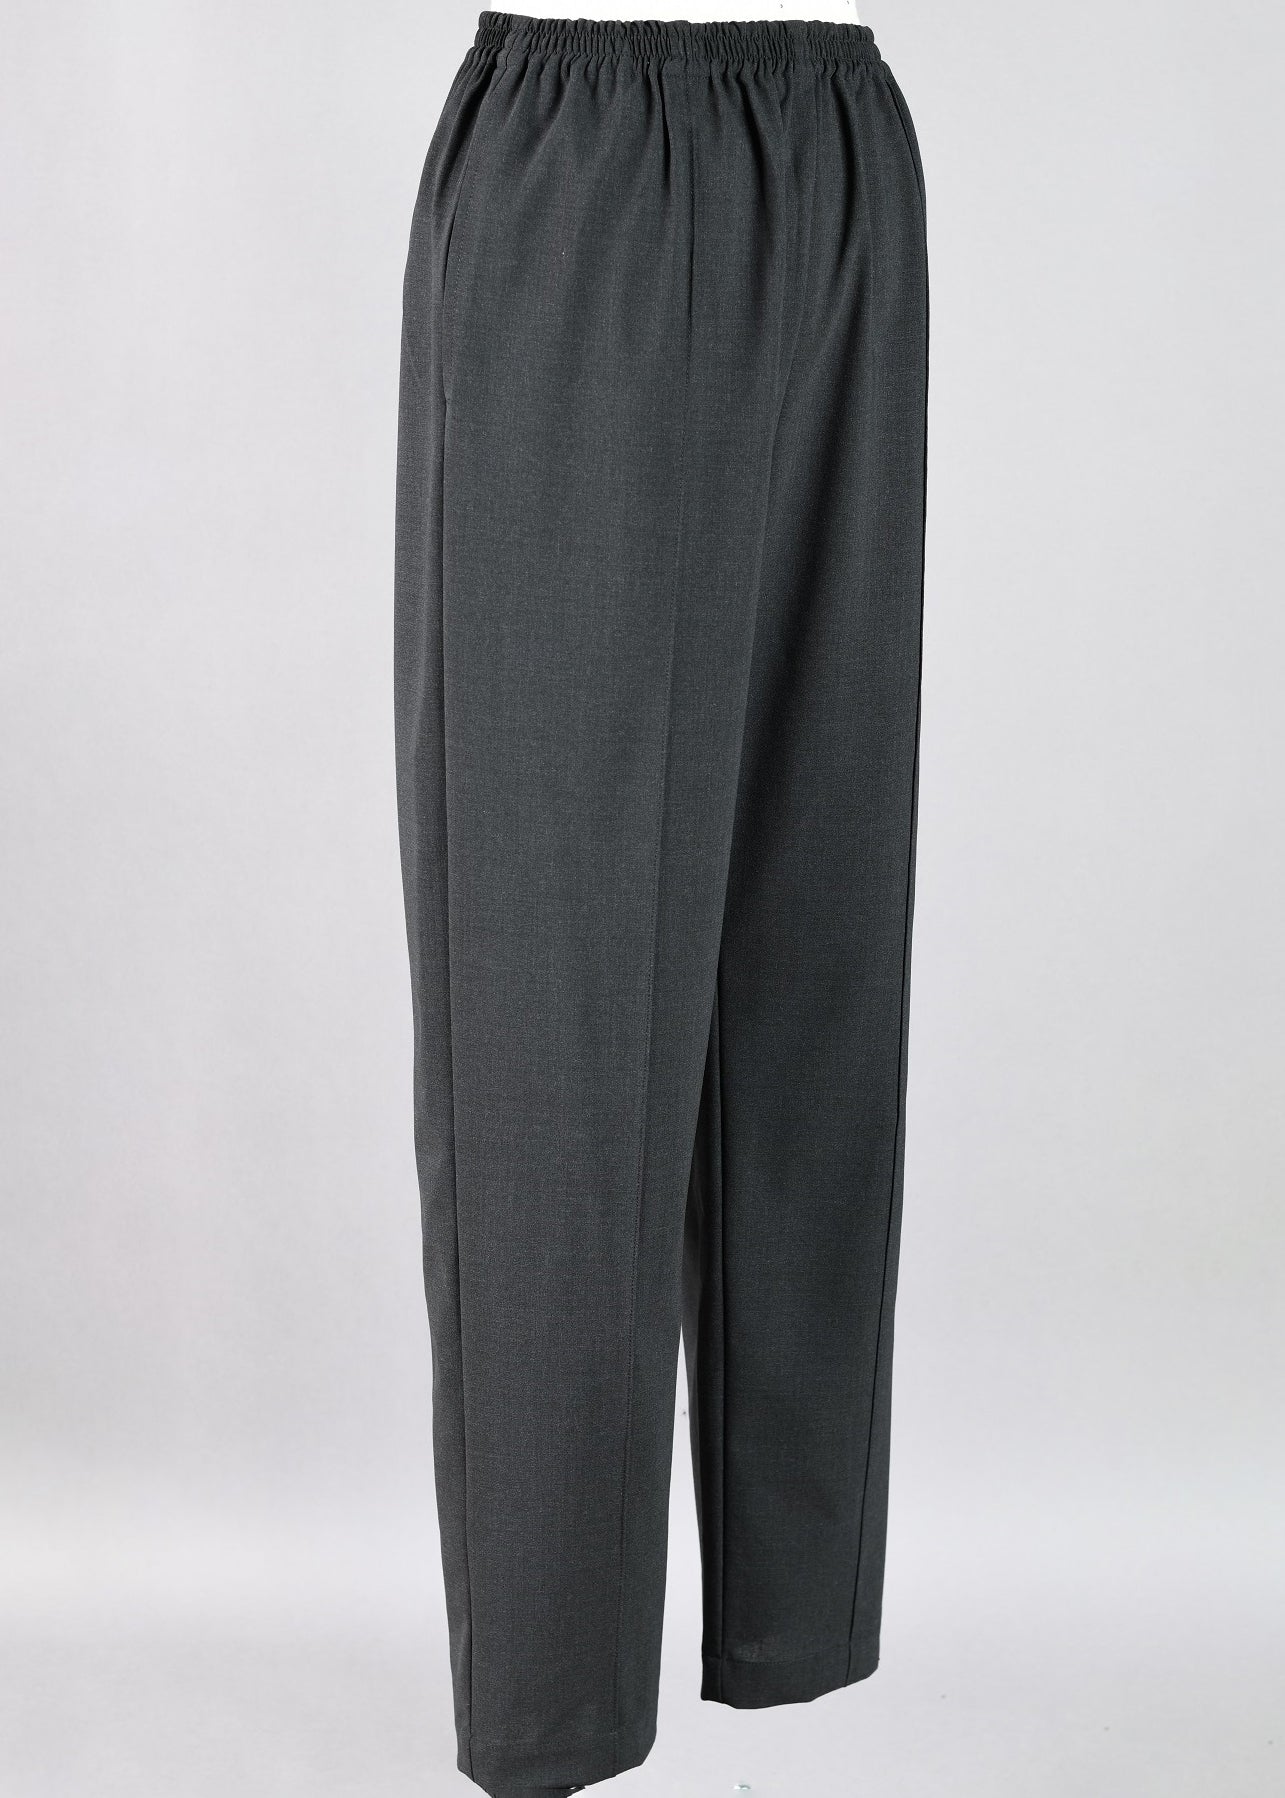 slimmer regular trousers w/front seam stitch detail